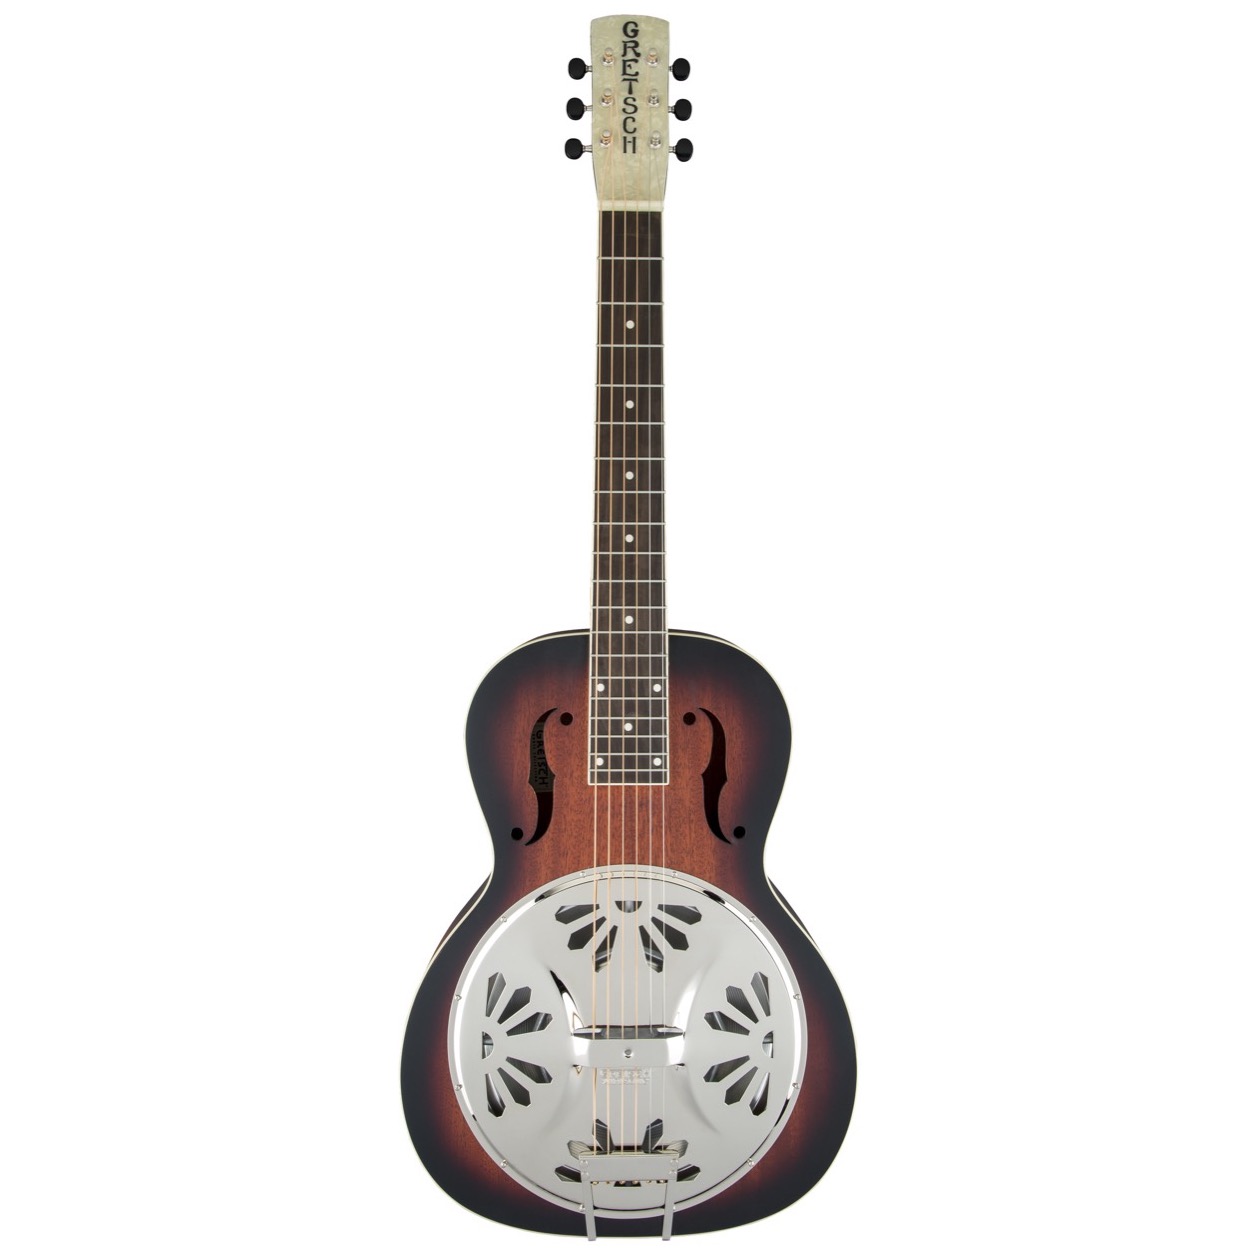 Gretsch G 9230 / G9230 Bobtail Square-Neck A.E., Mahogany Body Spider Cone Resonator Guitar, Fishman® Nashville Resonator Pickup, 2-Color Sunburst